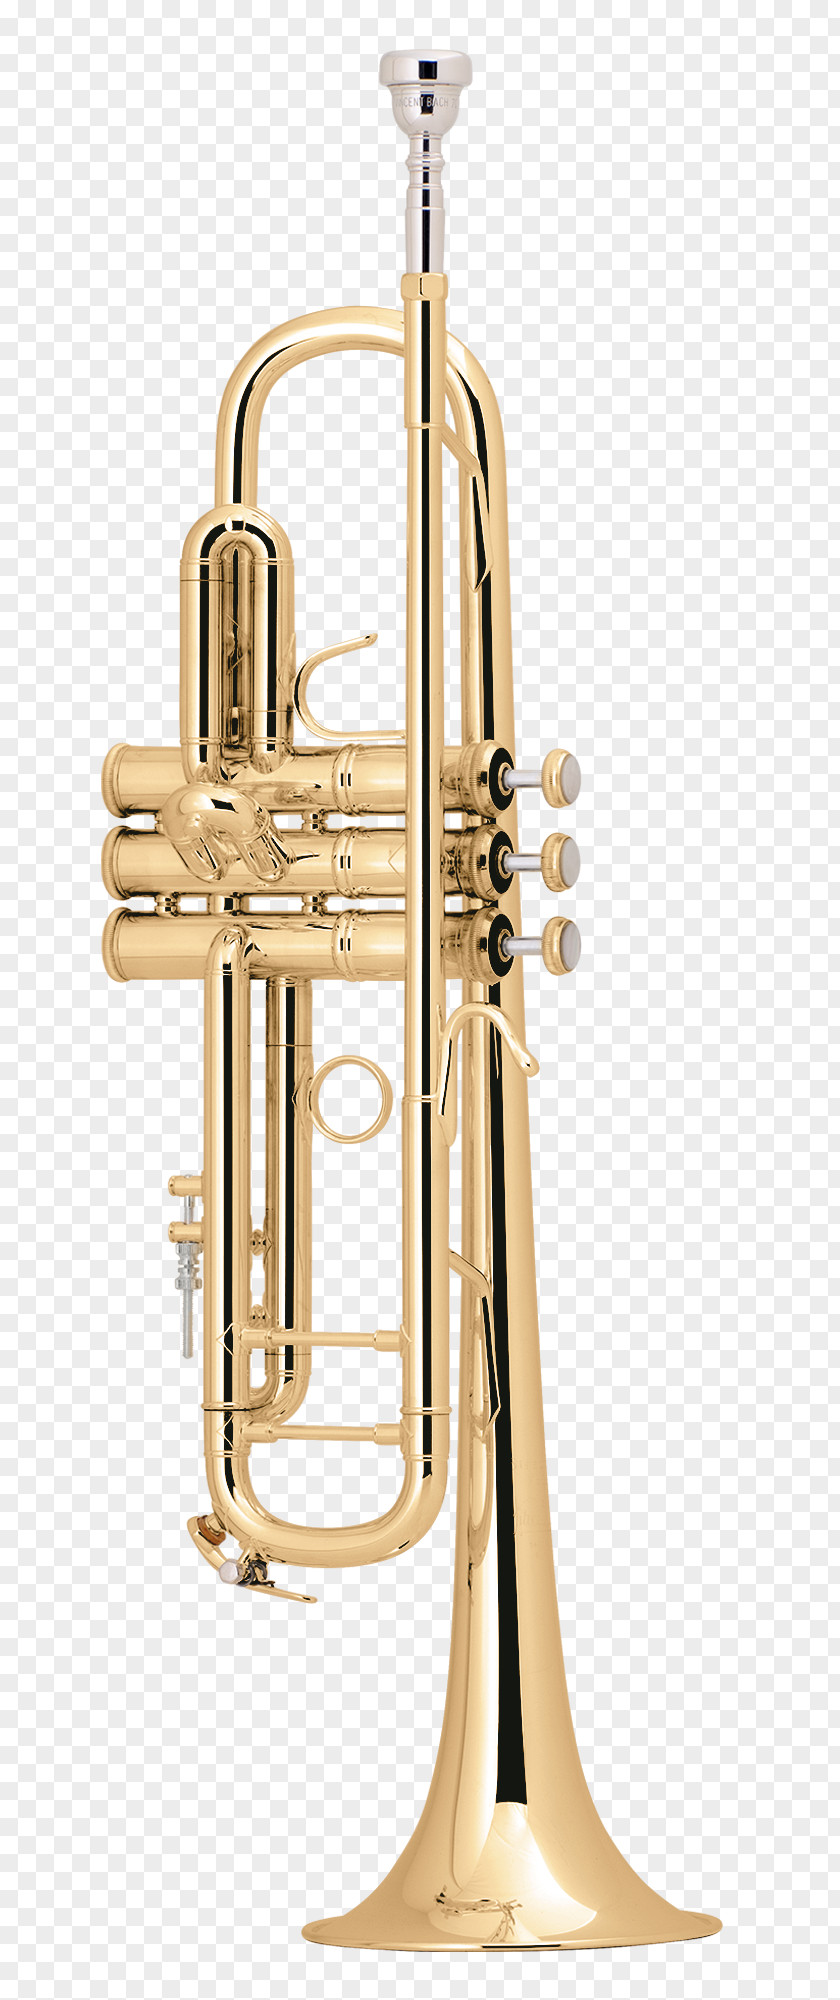 Trumpet Brass Instruments Musical Vincent Bach Corporation Trombone PNG